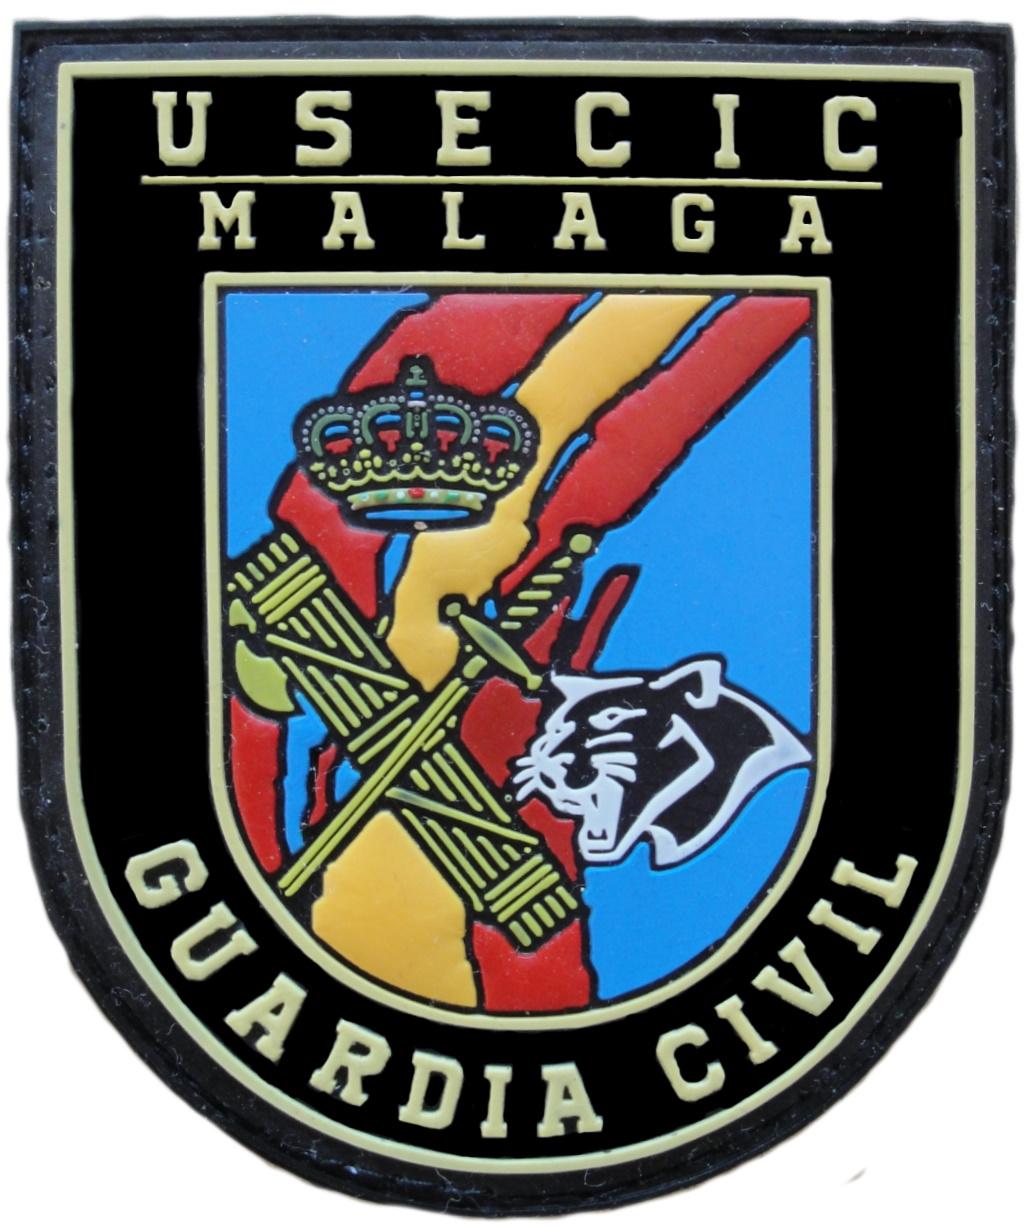 Guardia civil usecic Málaga parche insignia emblema distintivo